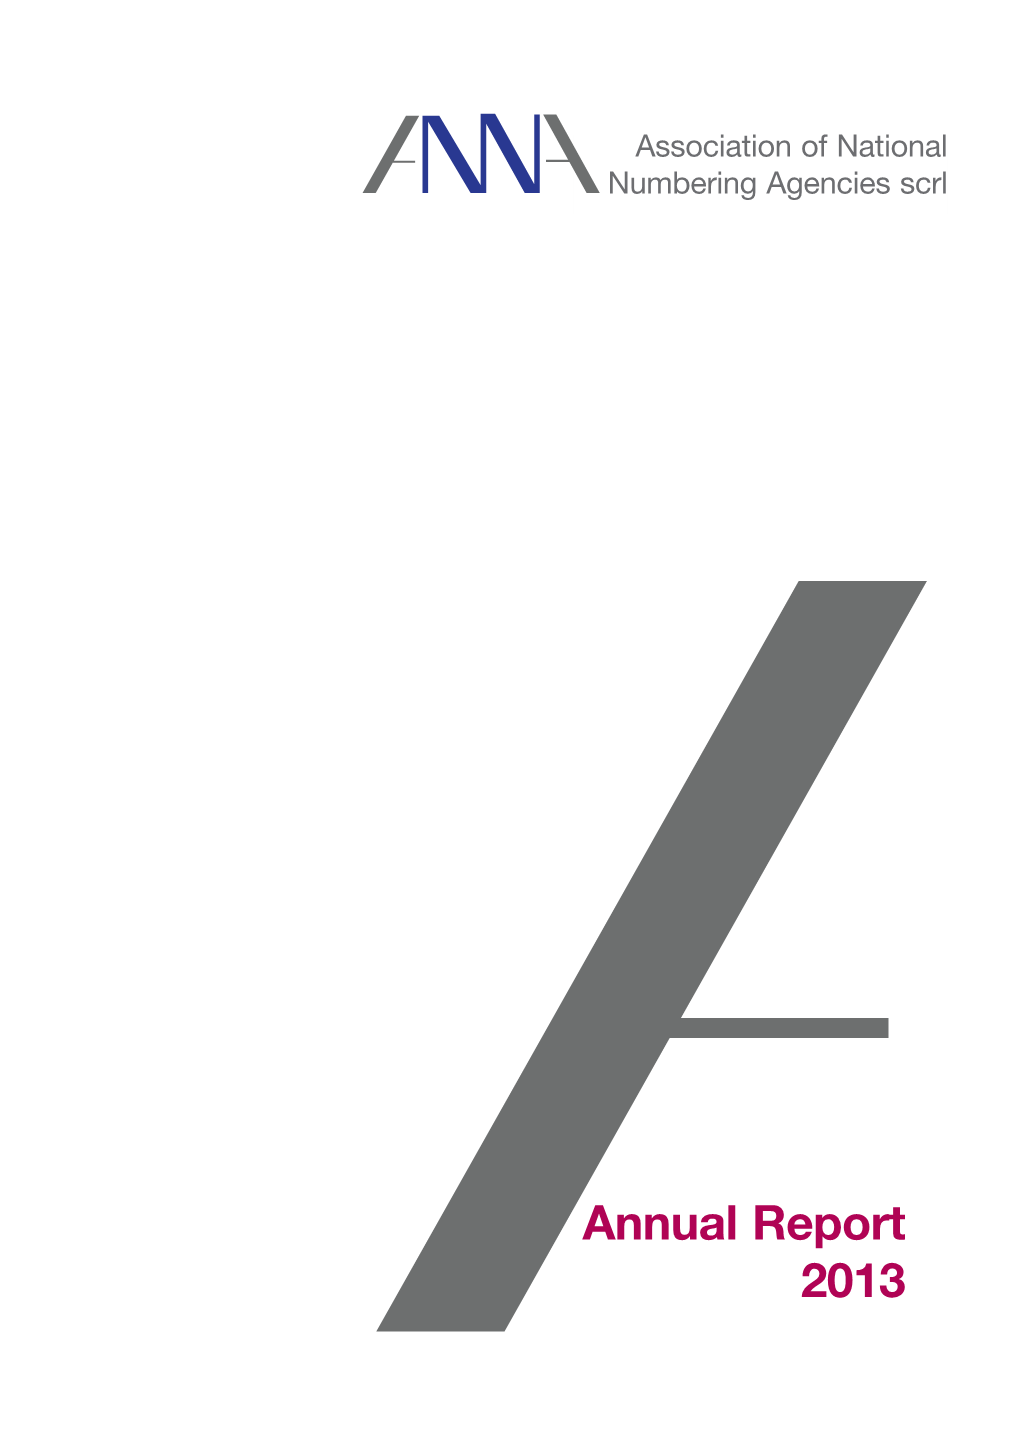 ANNA Annual Report.Indd